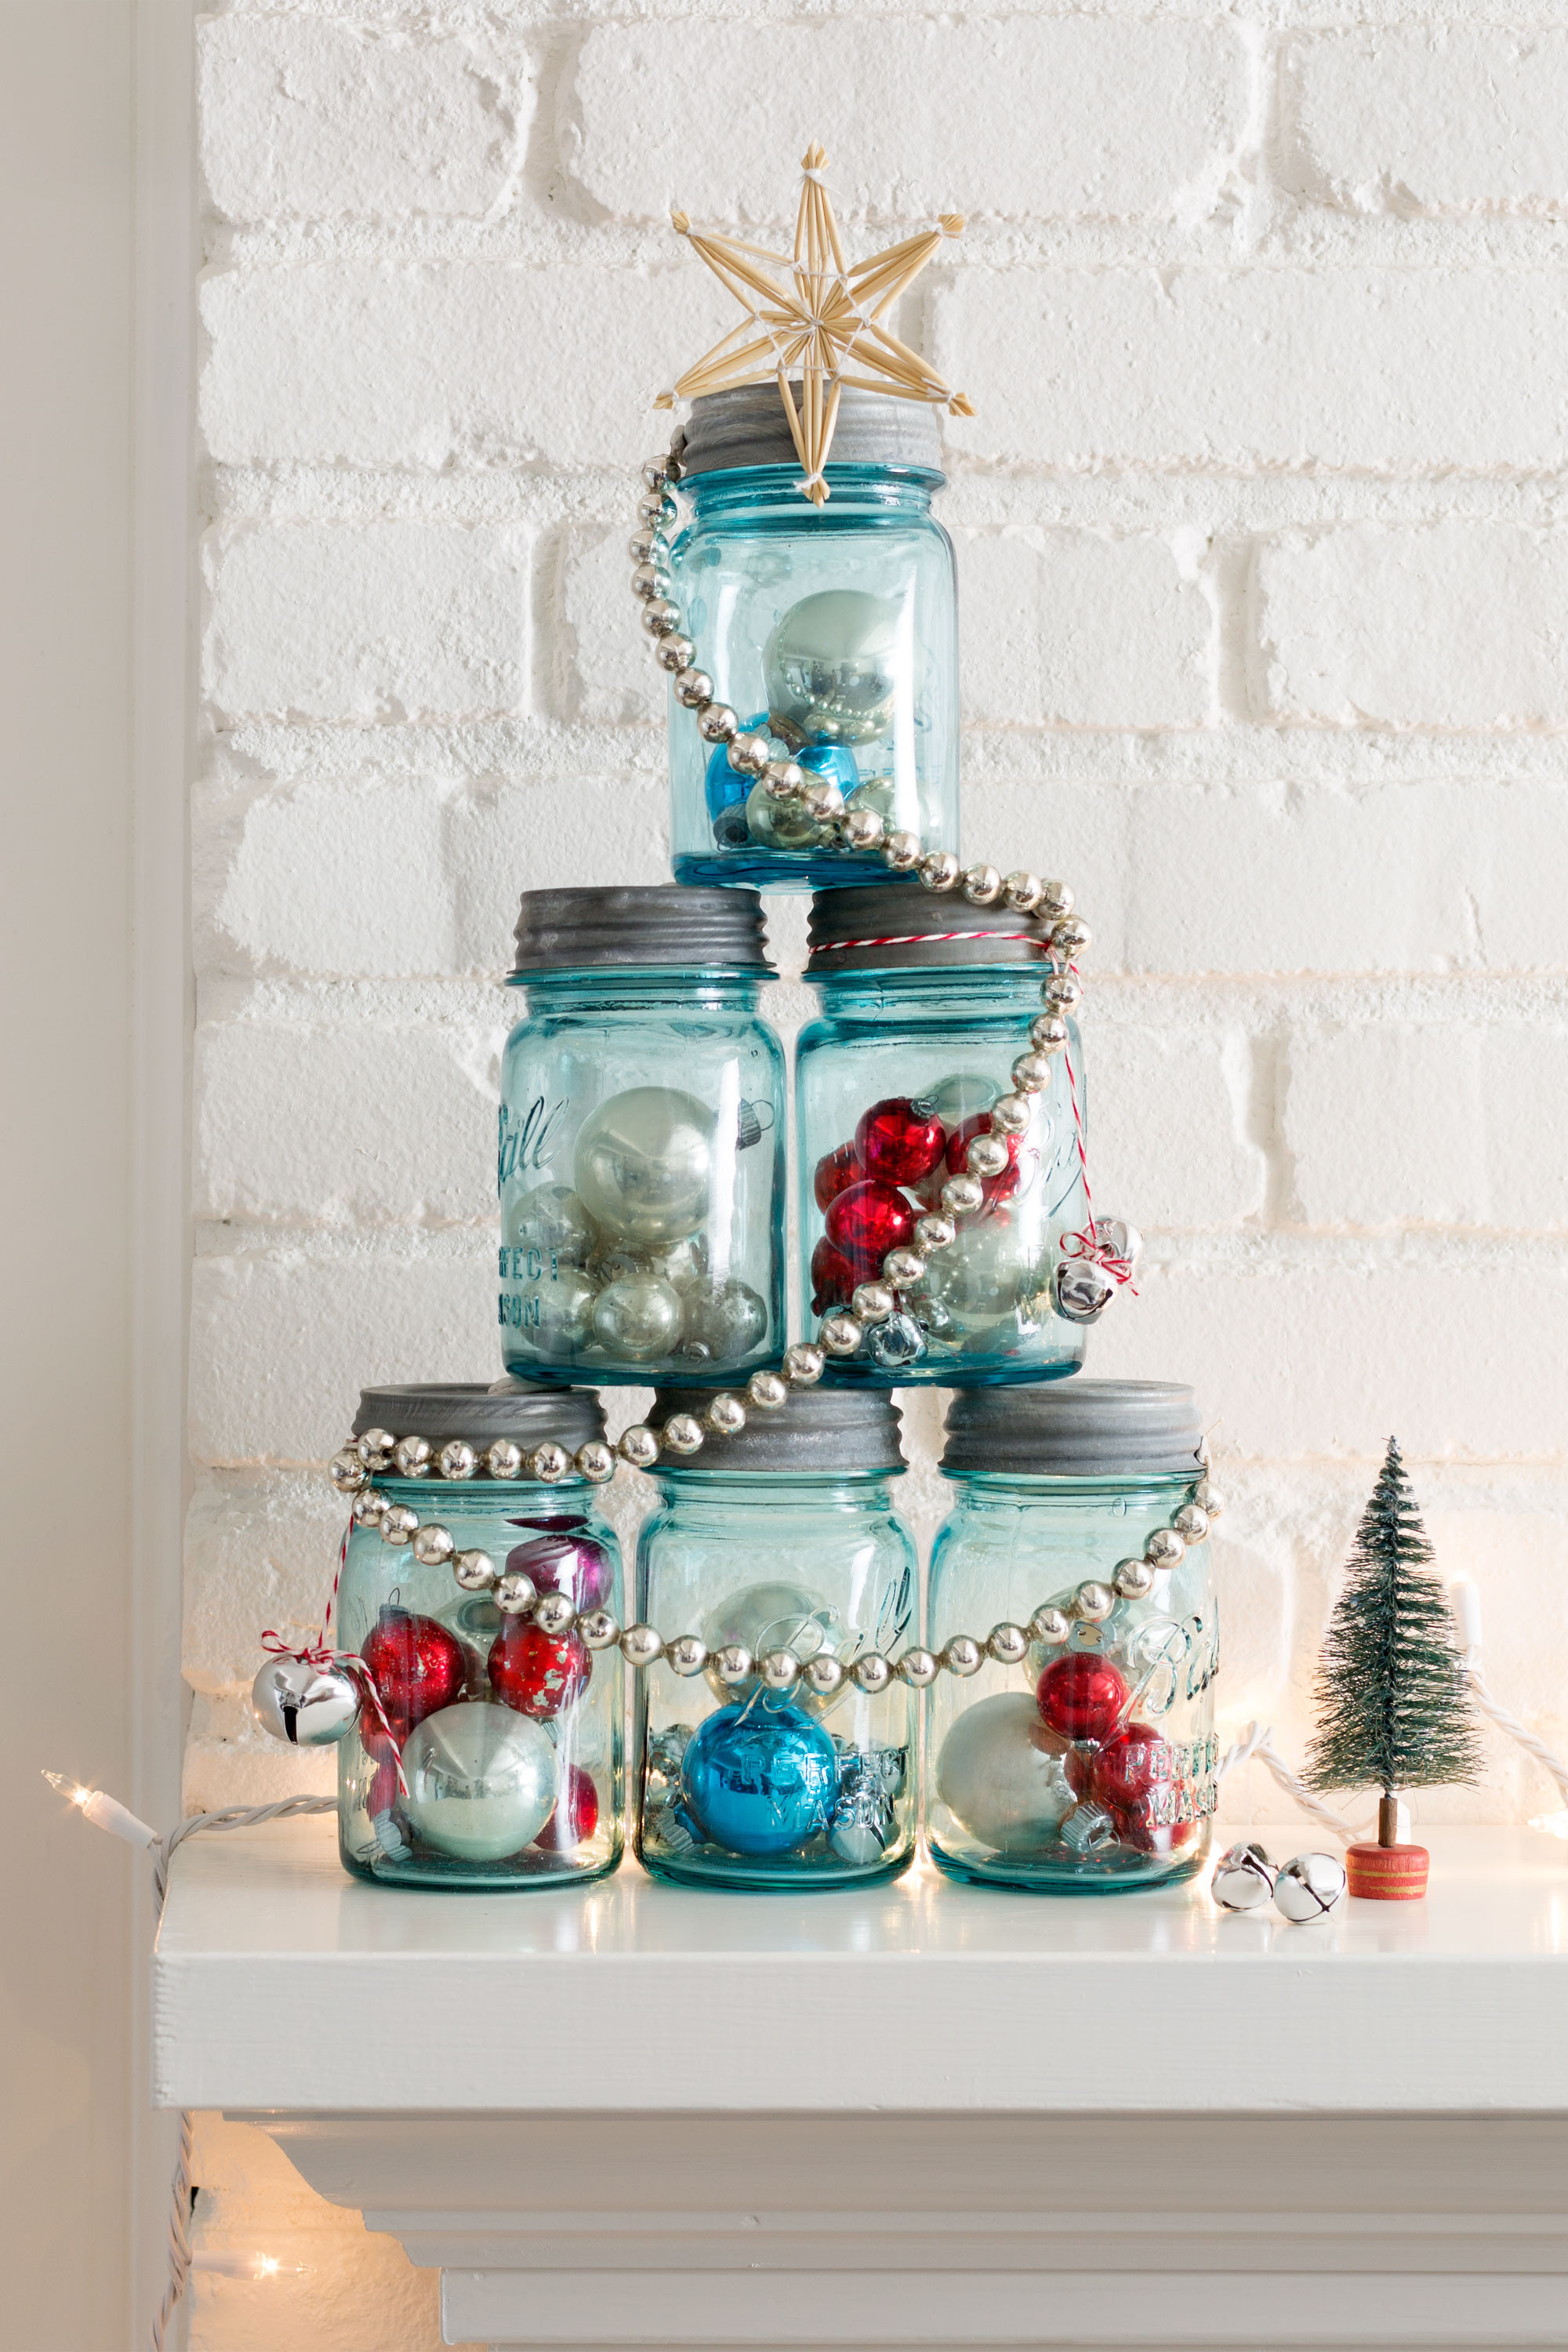 Best ideas about DIY Christmas Decoration
. Save or Pin 37 DIY Homemade Christmas Decorations Christmas Decor Now.